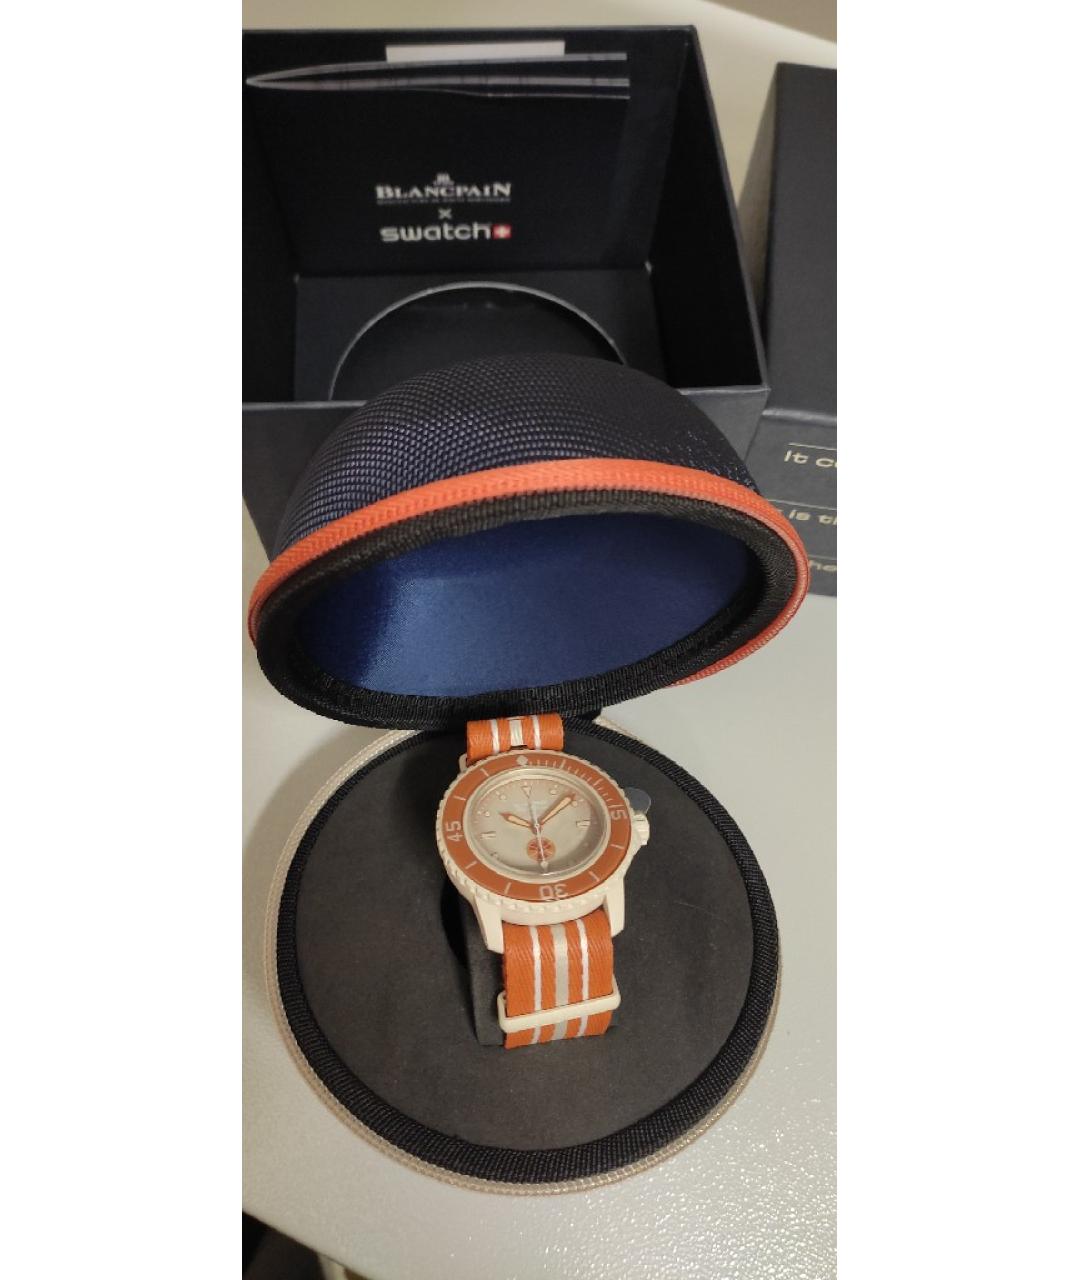 Blancpain Оранжевое стальные часы, фото 7